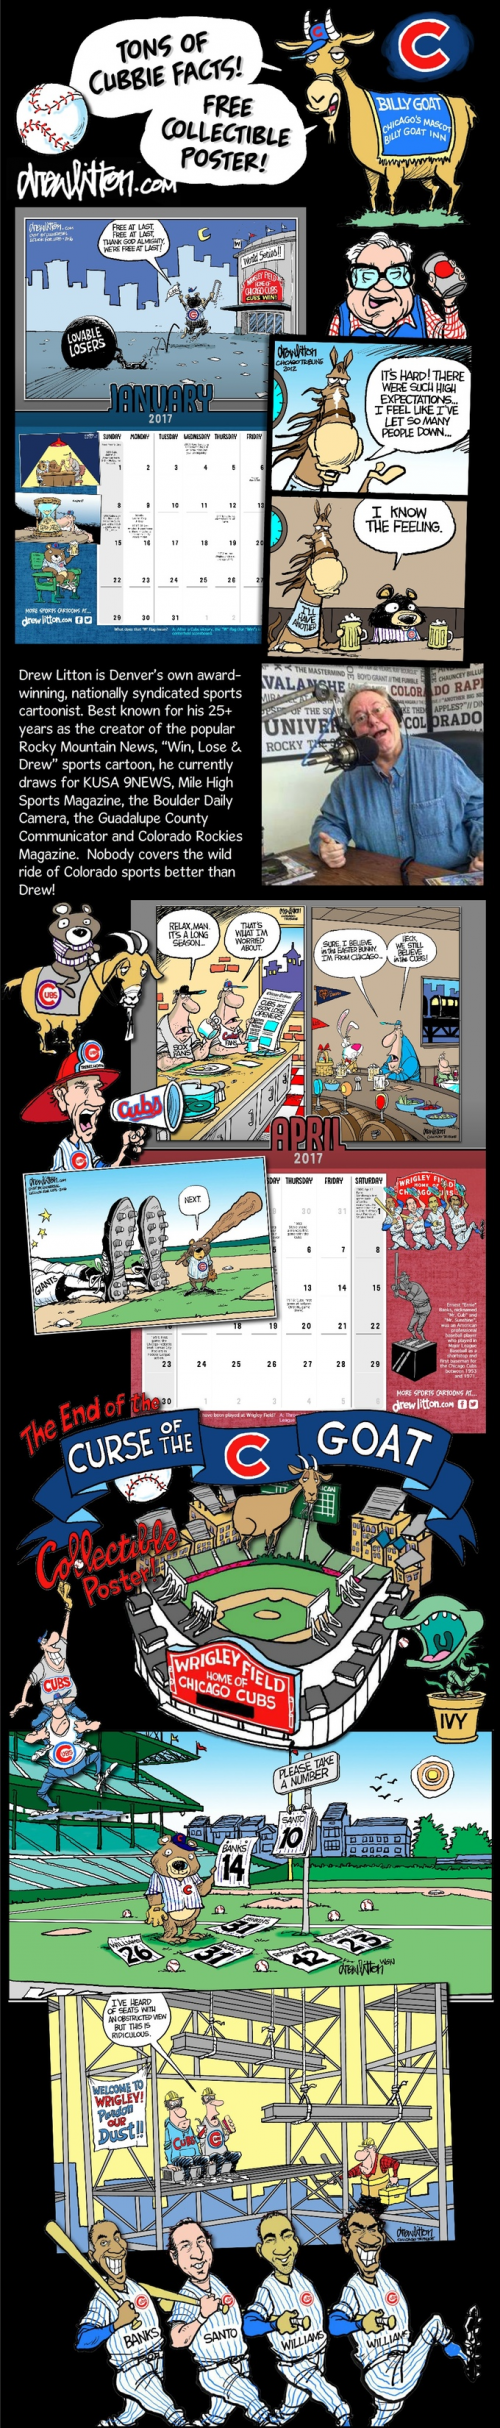 Chicago Cubs Cartoon Calendar'